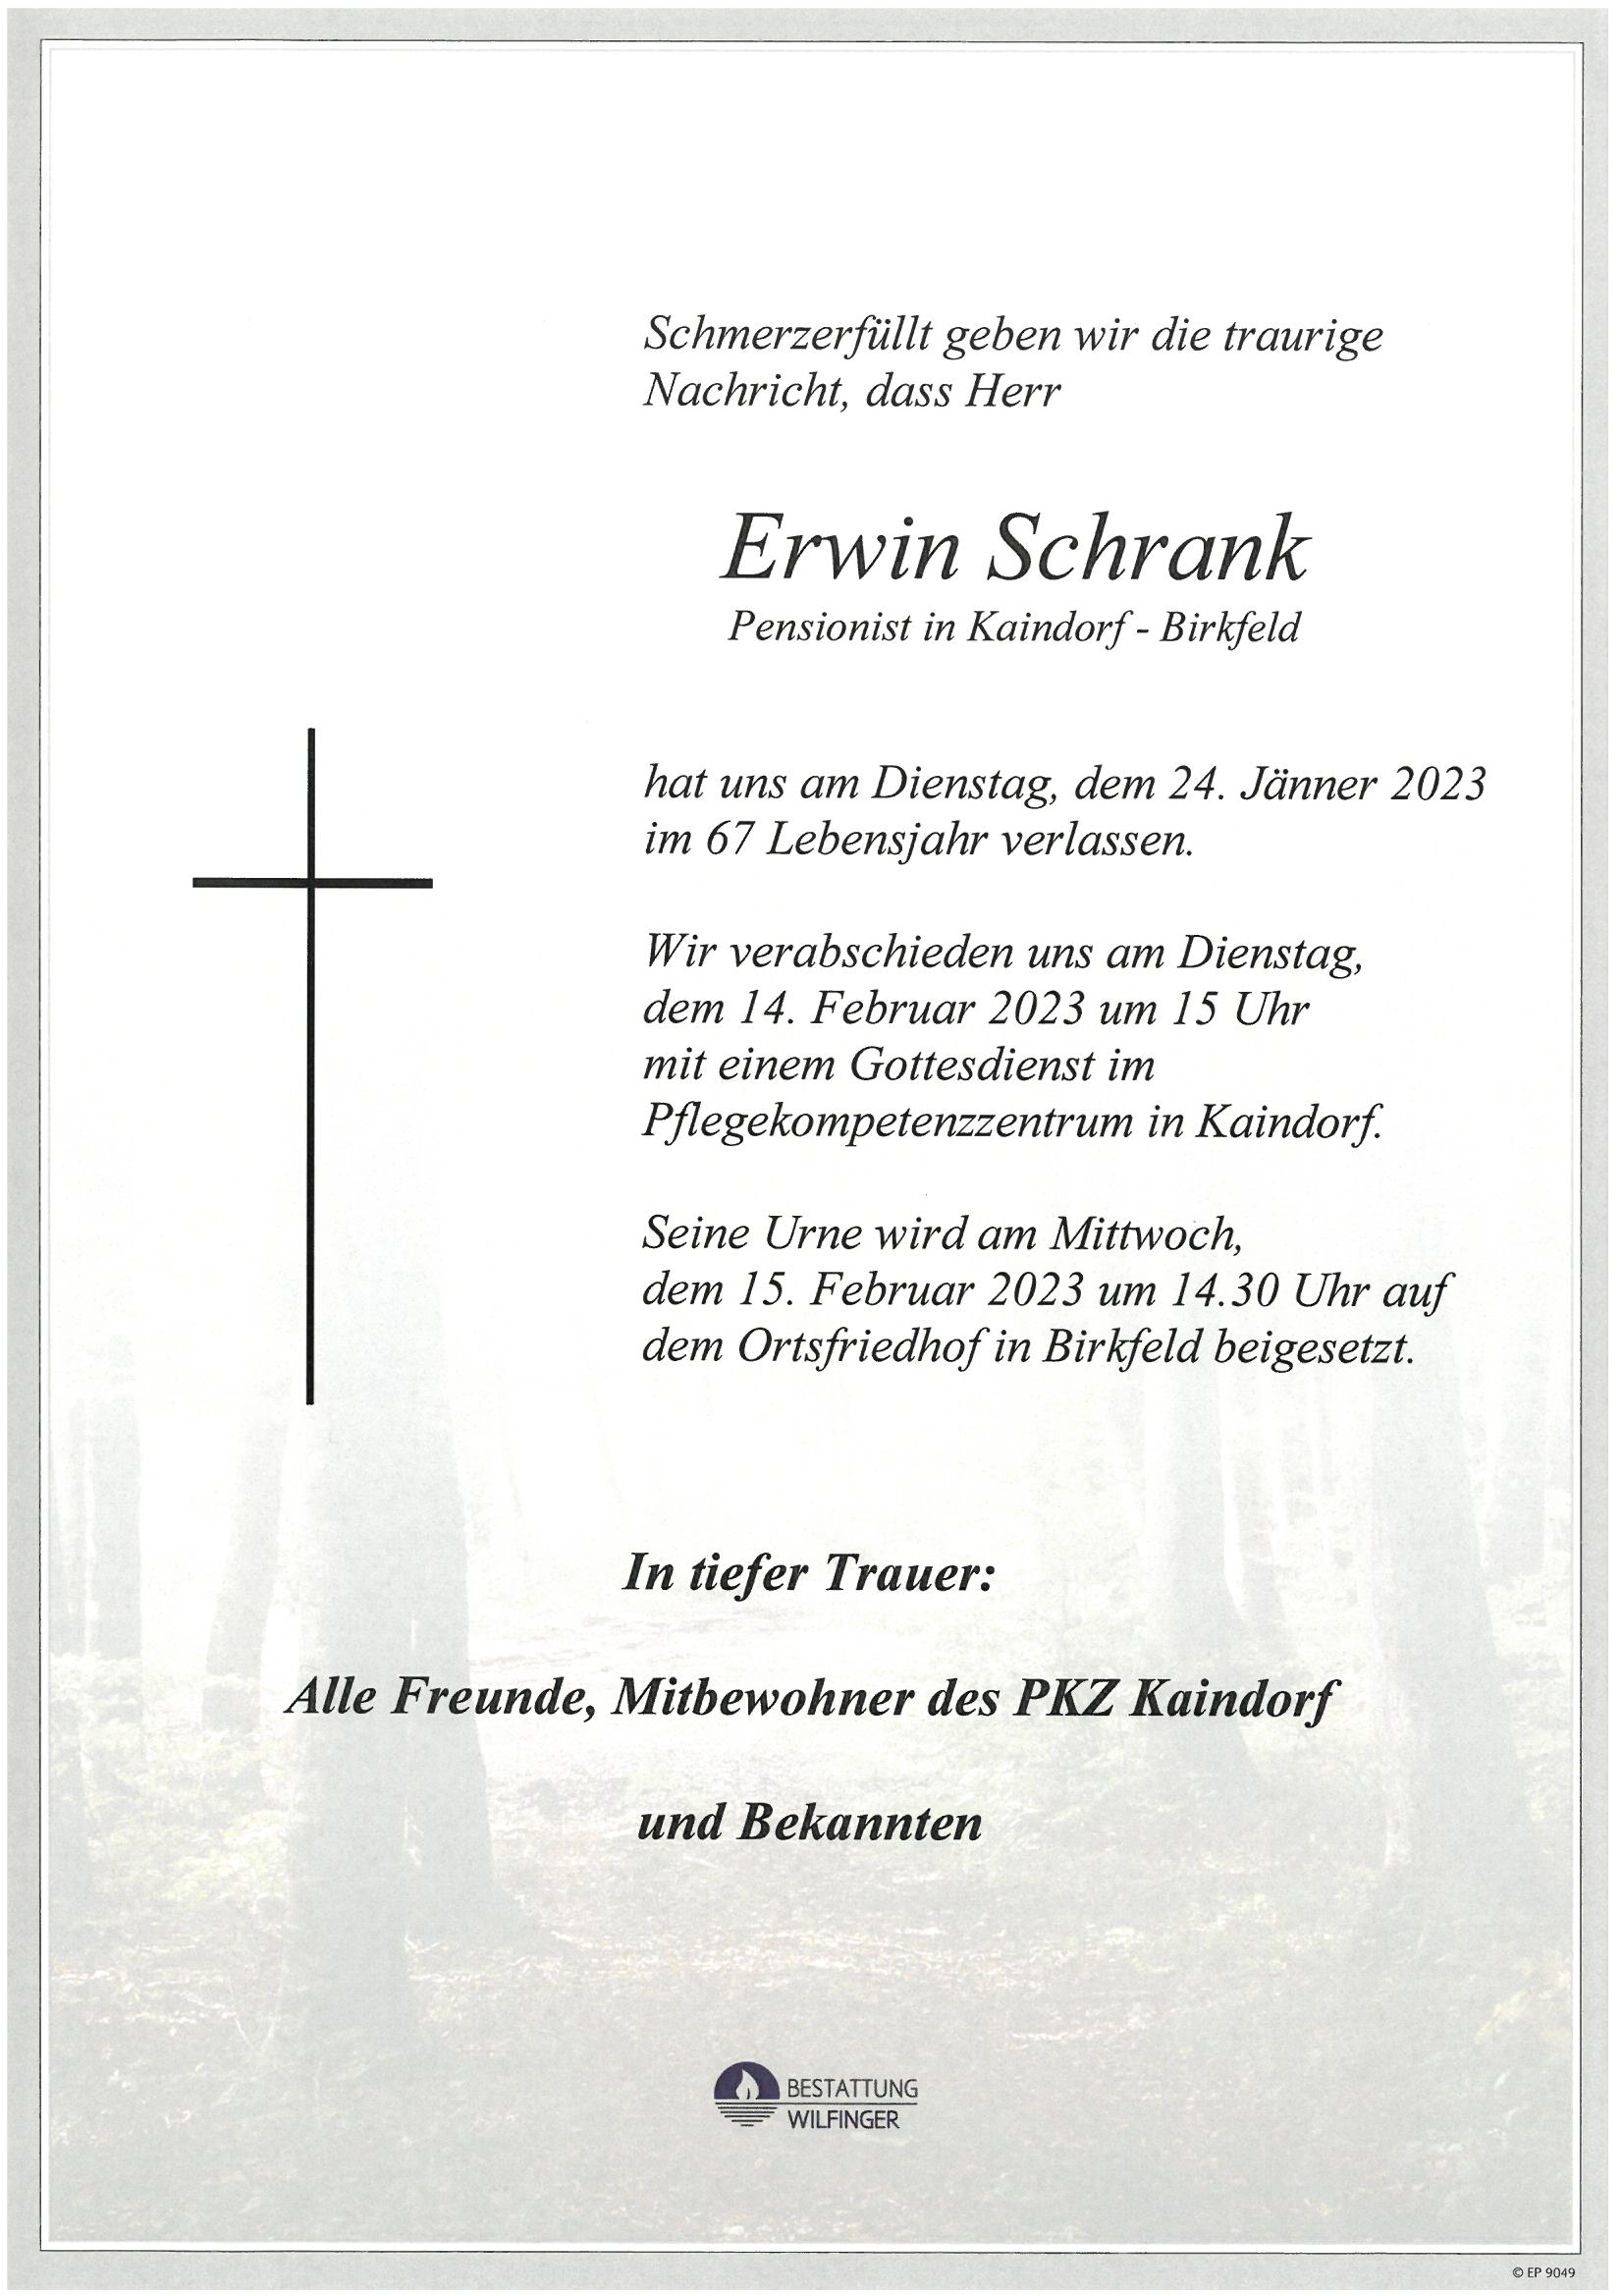 Erwin Schrank, Kaindorf – Birkfeld